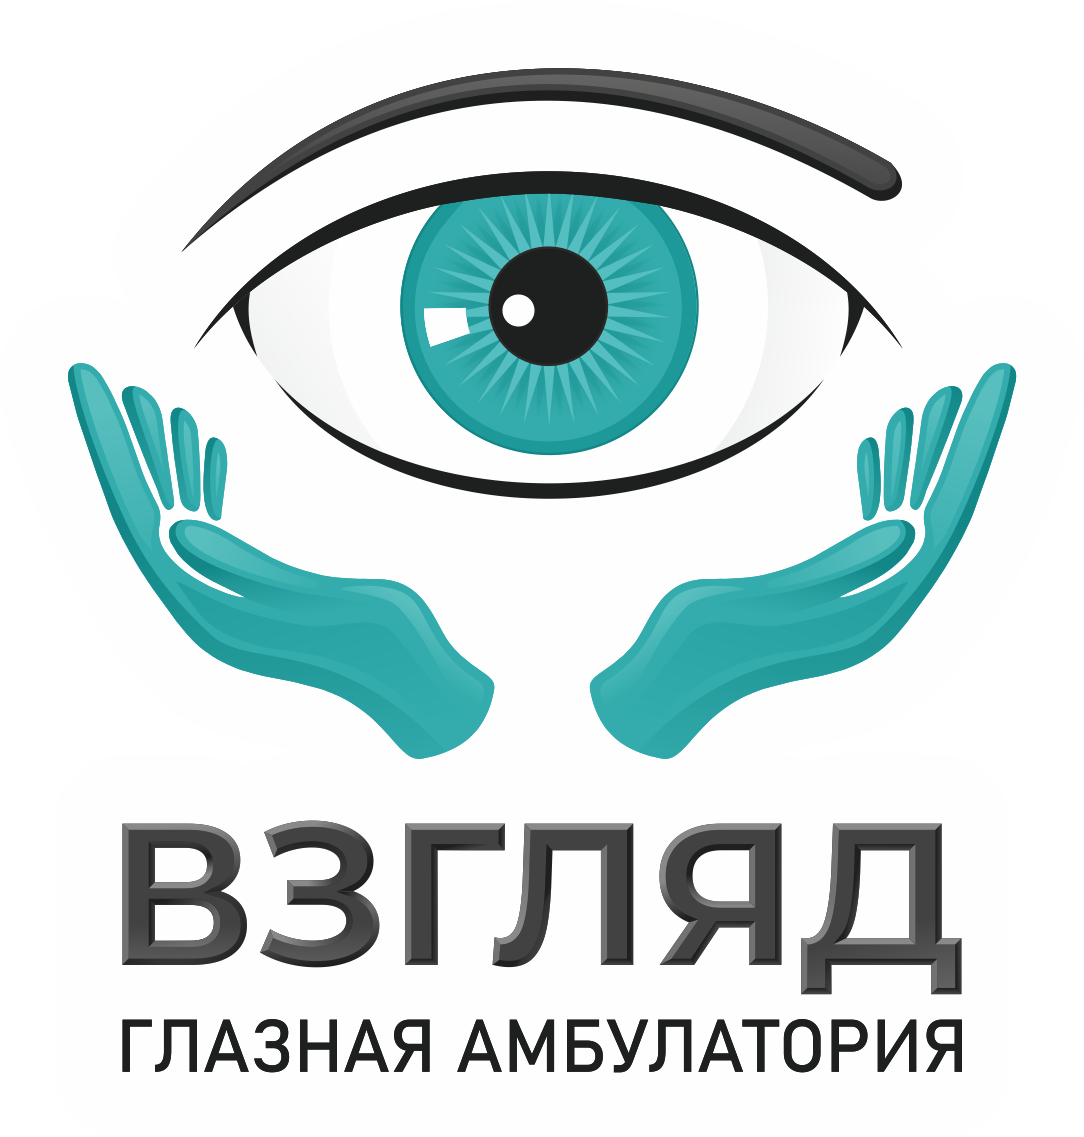 Глазная амбулатория «Взгляд» - Город Чита logo.png